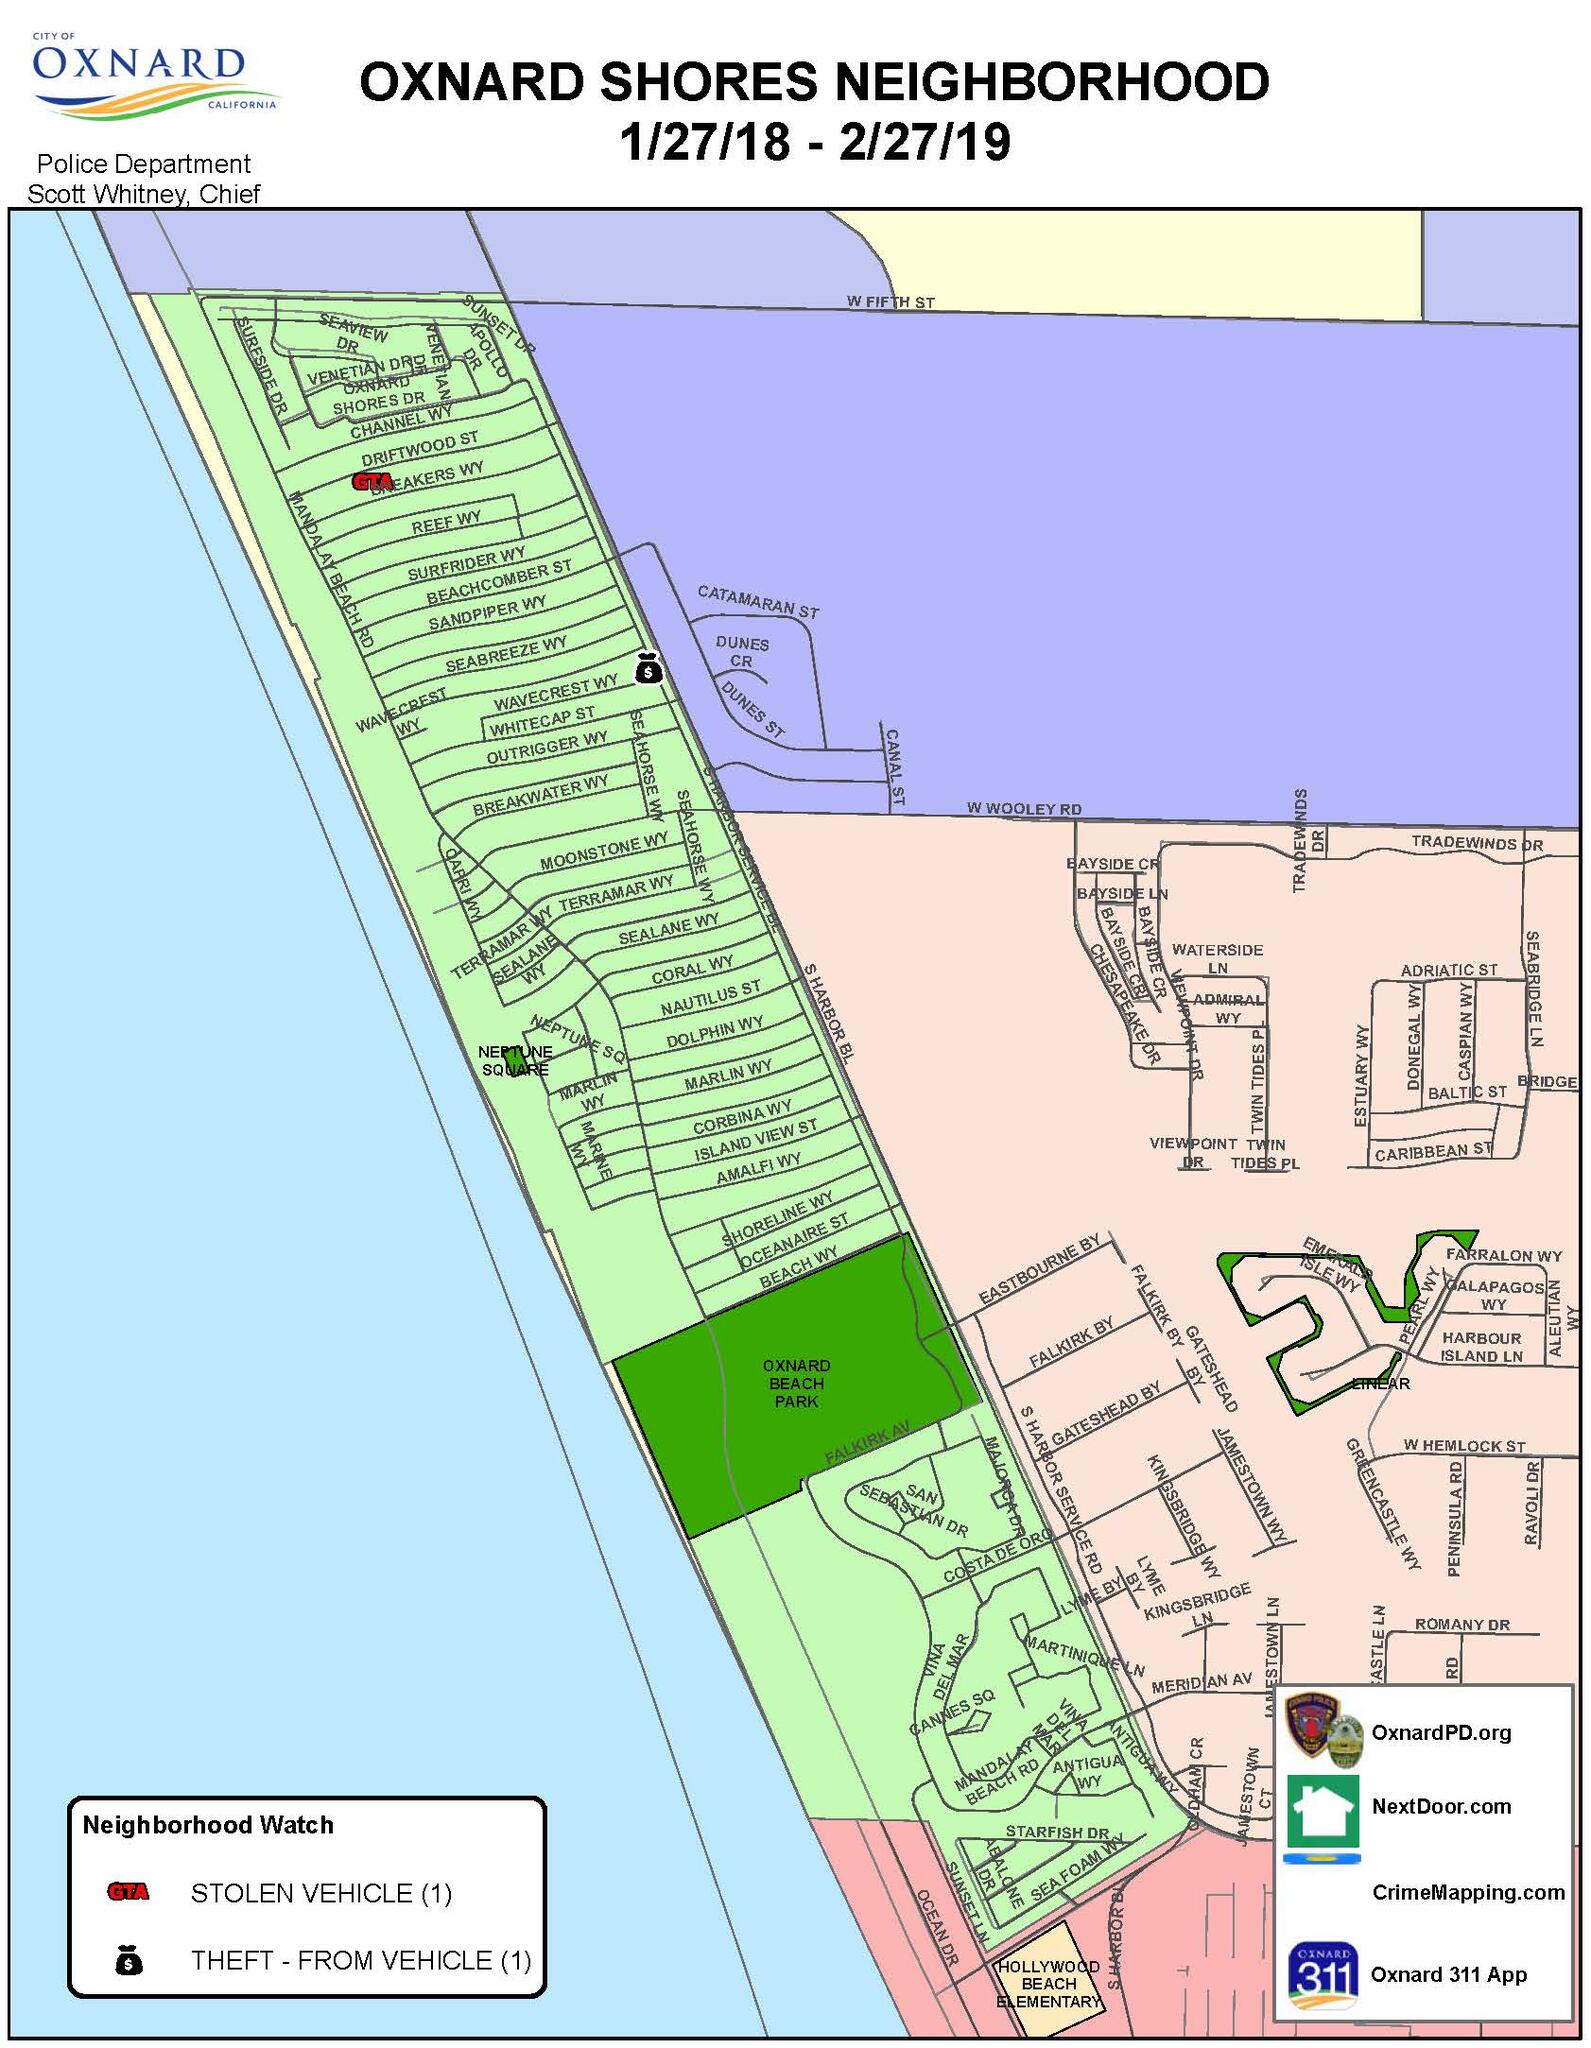 oxnard-shores-neighborhood-watch-map-oxnard-police-department